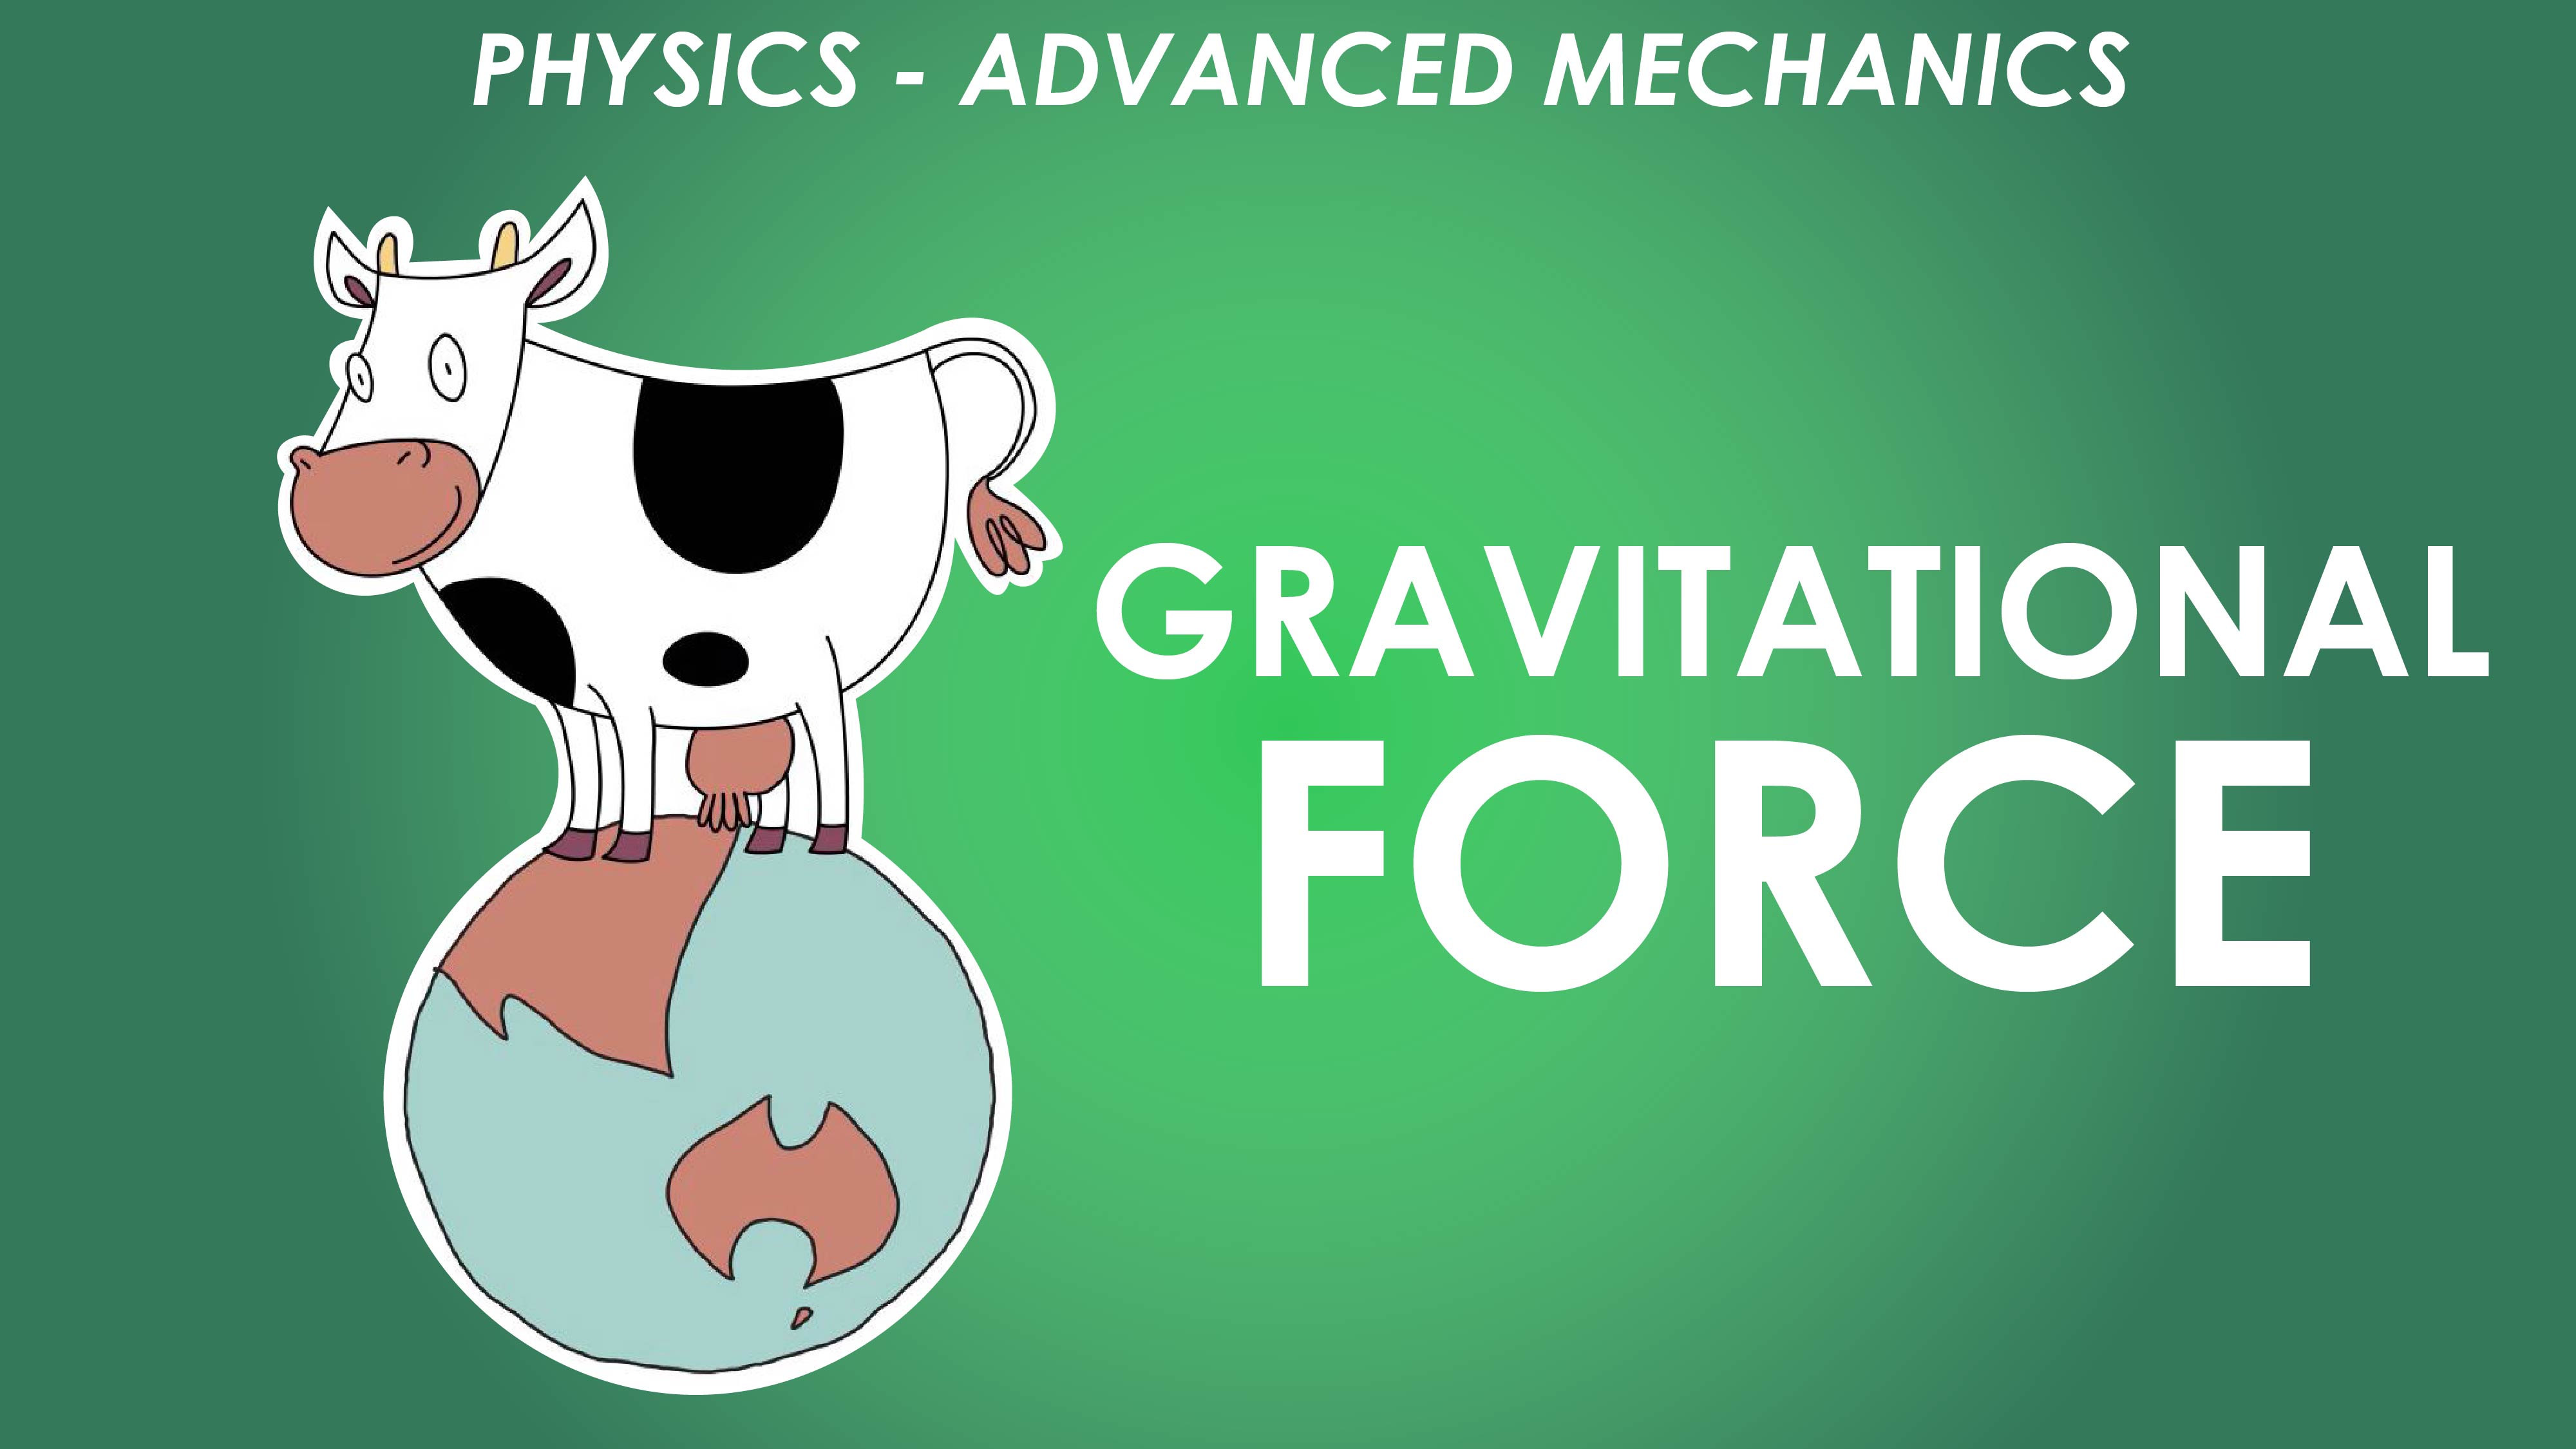 Gravitational Force - Motion in Gravitational Fields